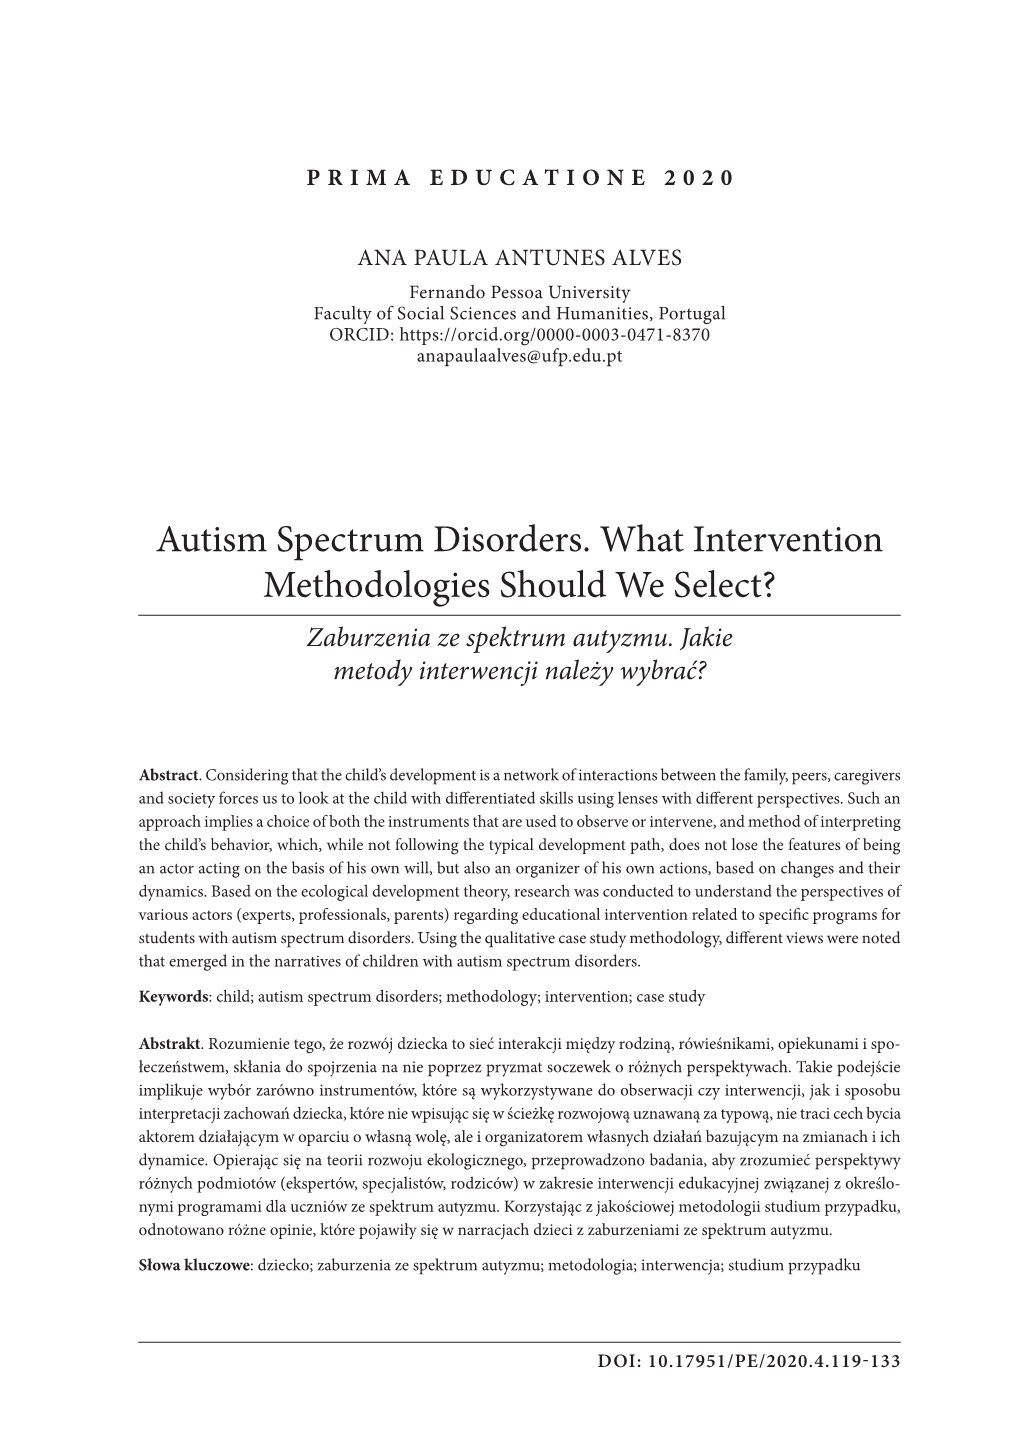 Autism Spectrum Disorders. What Intervention Methodologies Should We Select? Zaburzenia Ze Spektrum Autyzmu